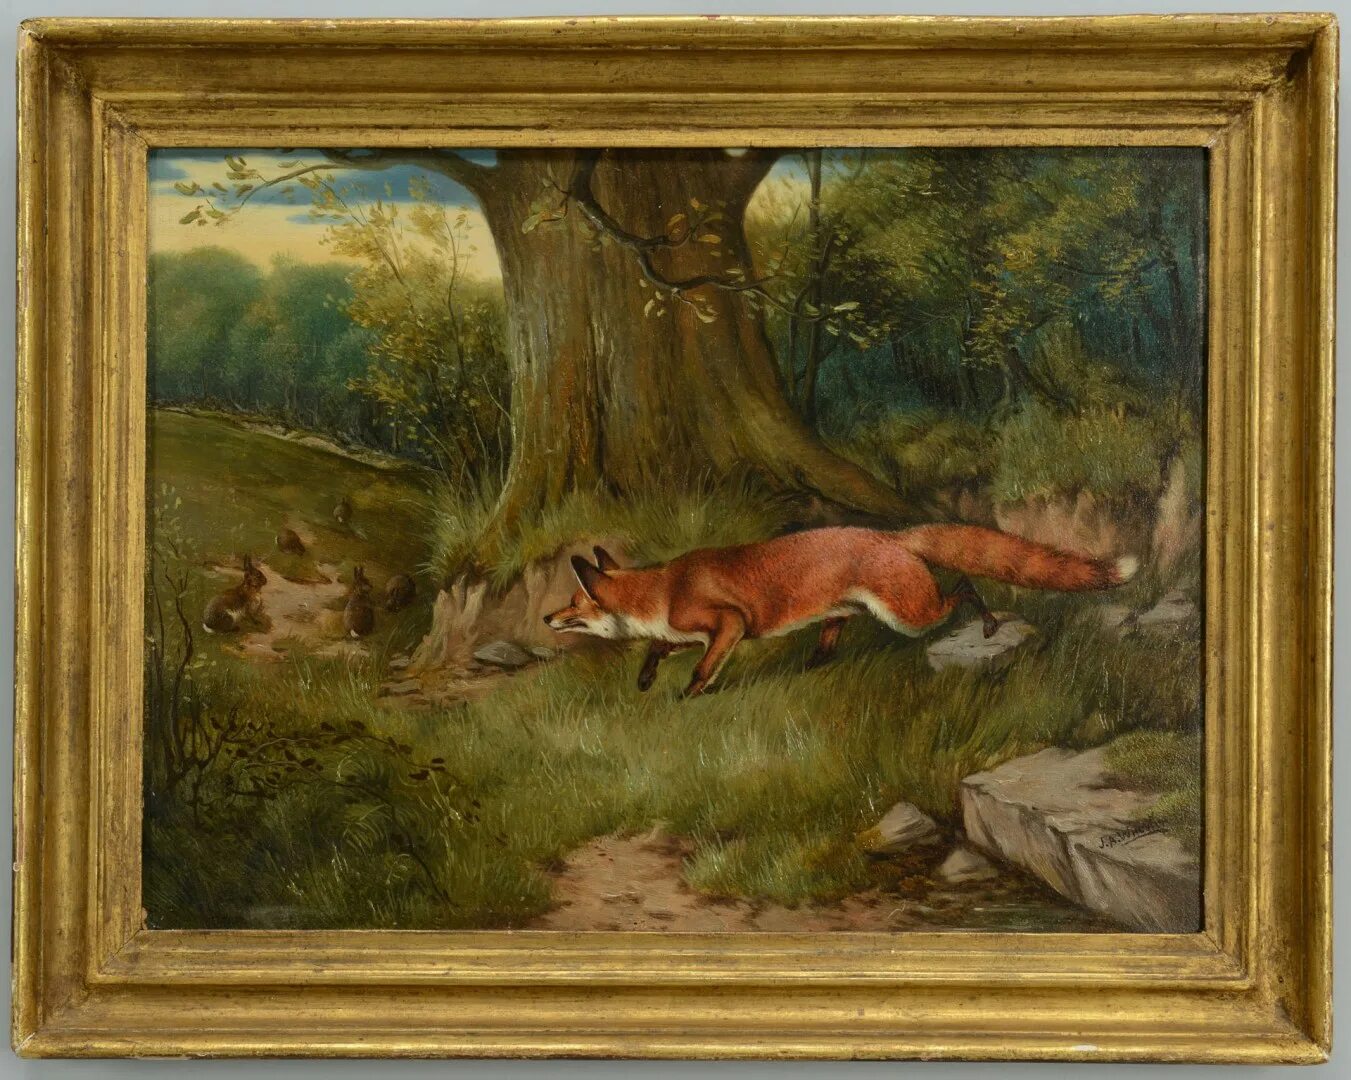 Фокс Хантинг. Rabbit охота картина. Художник Henry Hintermeister 1897 1972. Fox hunting